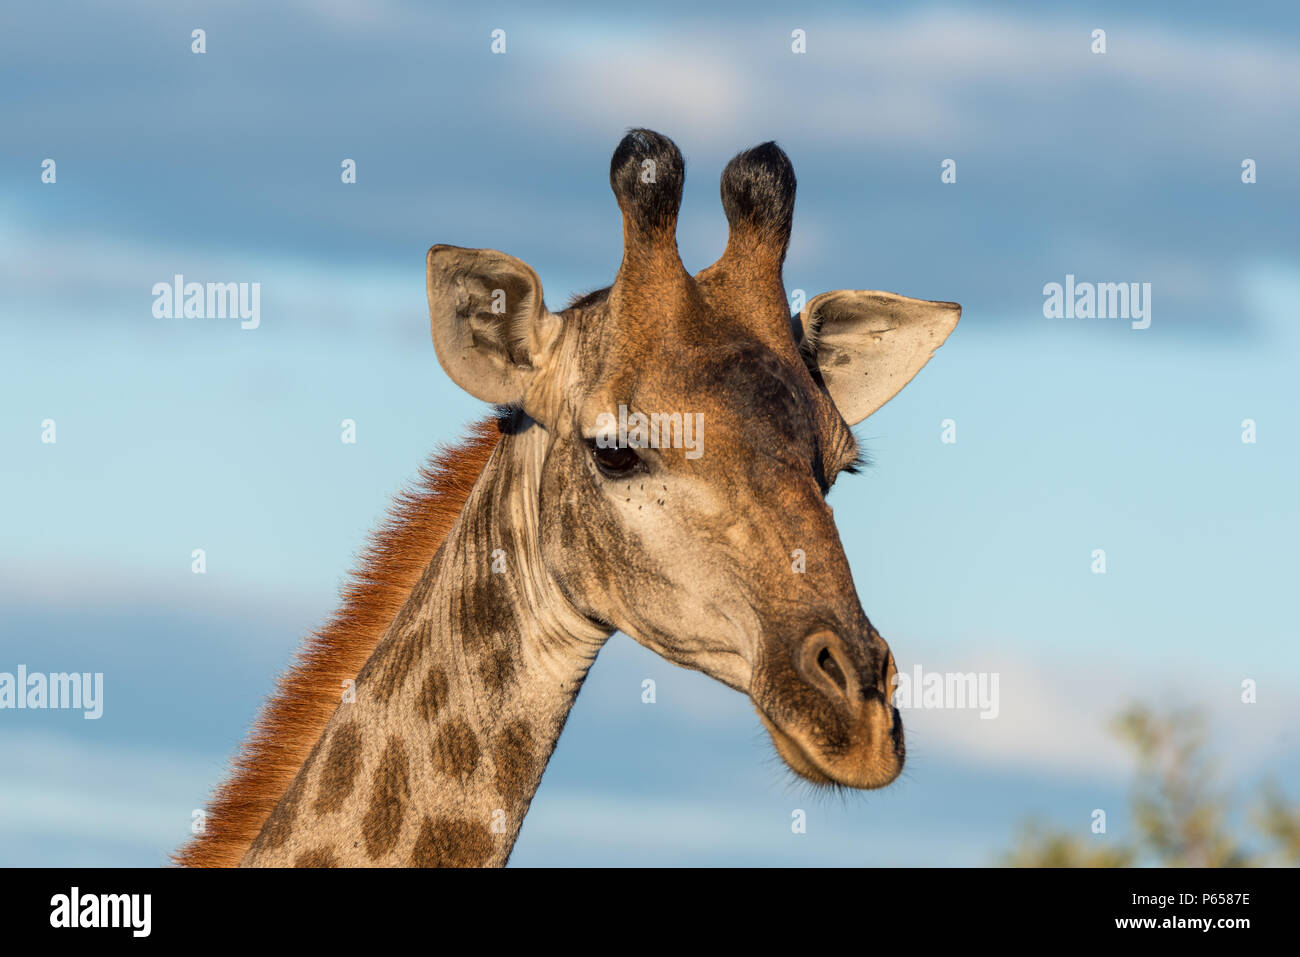 Close up of girafe de la tête, vue de profil Banque D'Images